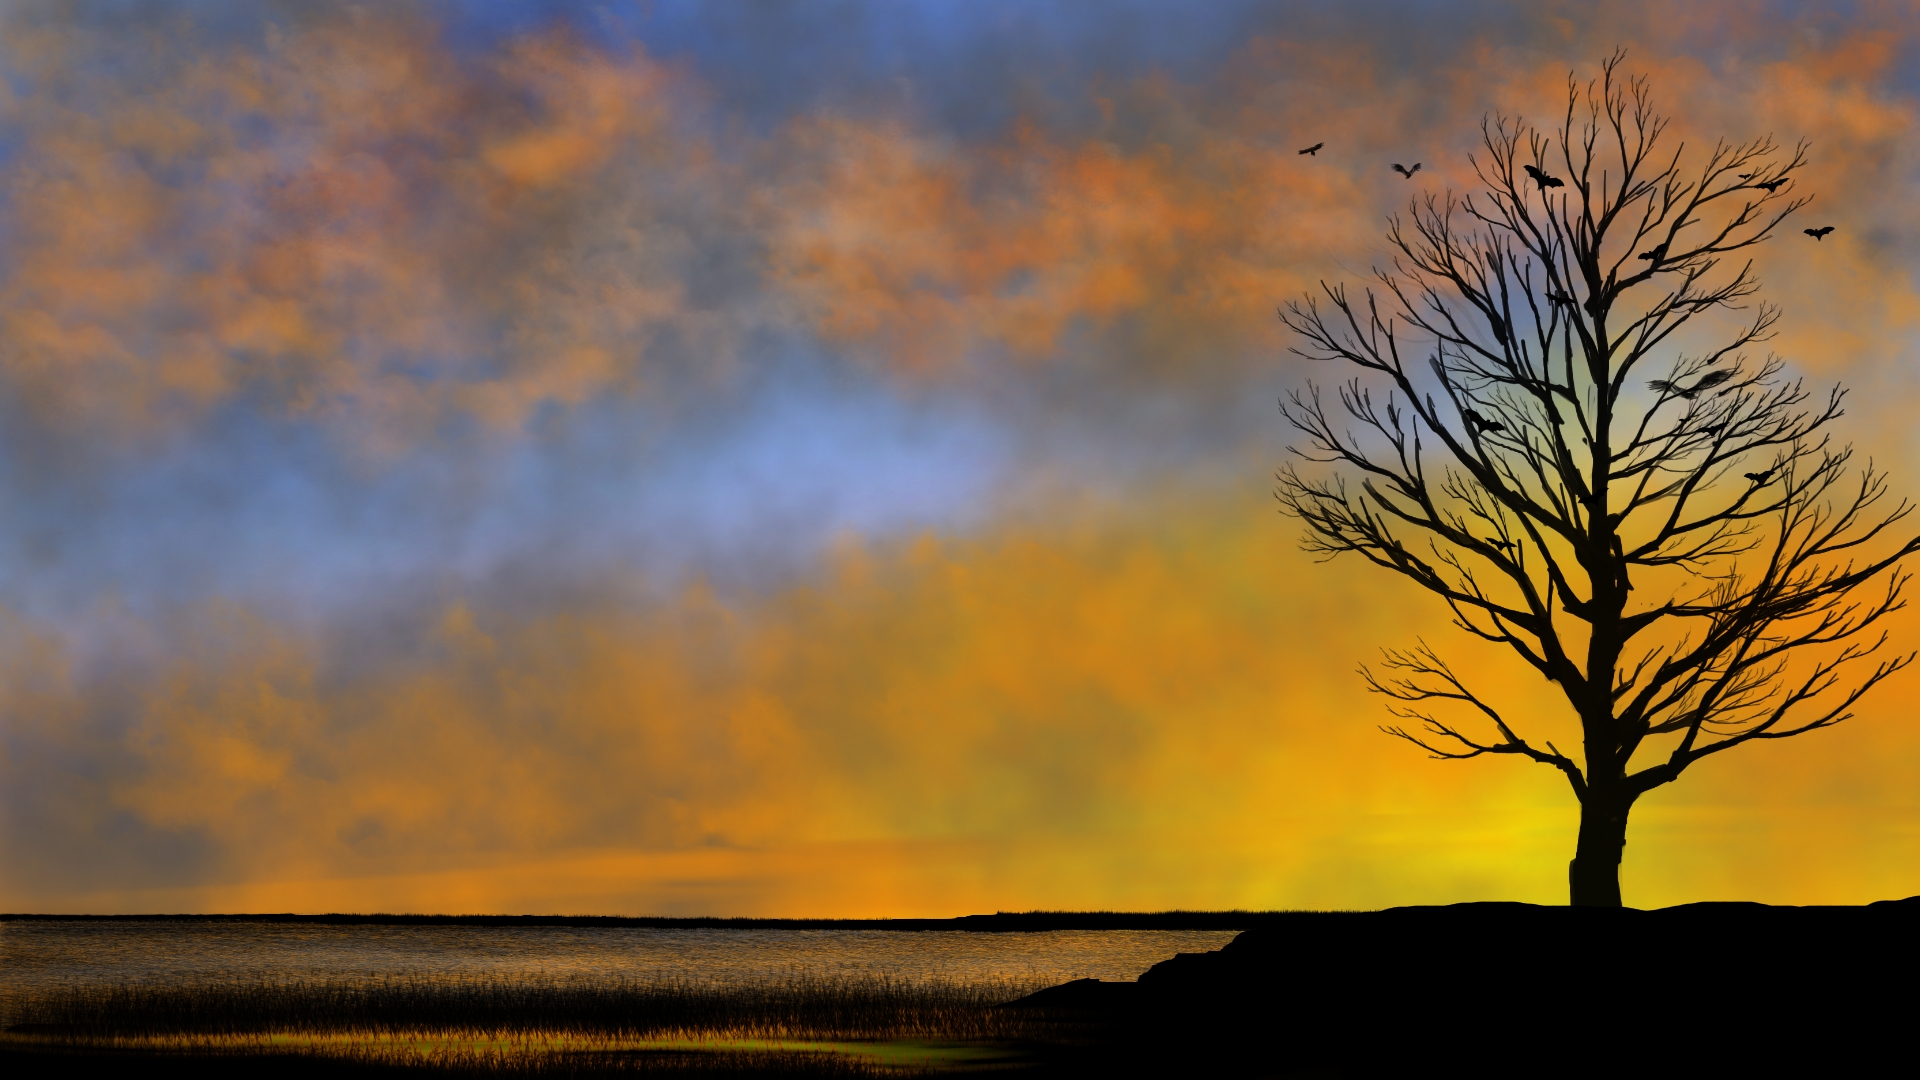 Digital Painting Digital Art Nature Landscape Twilight Sunset Sunset Glow Clouds Sky Silhouette Bran 1920x1080